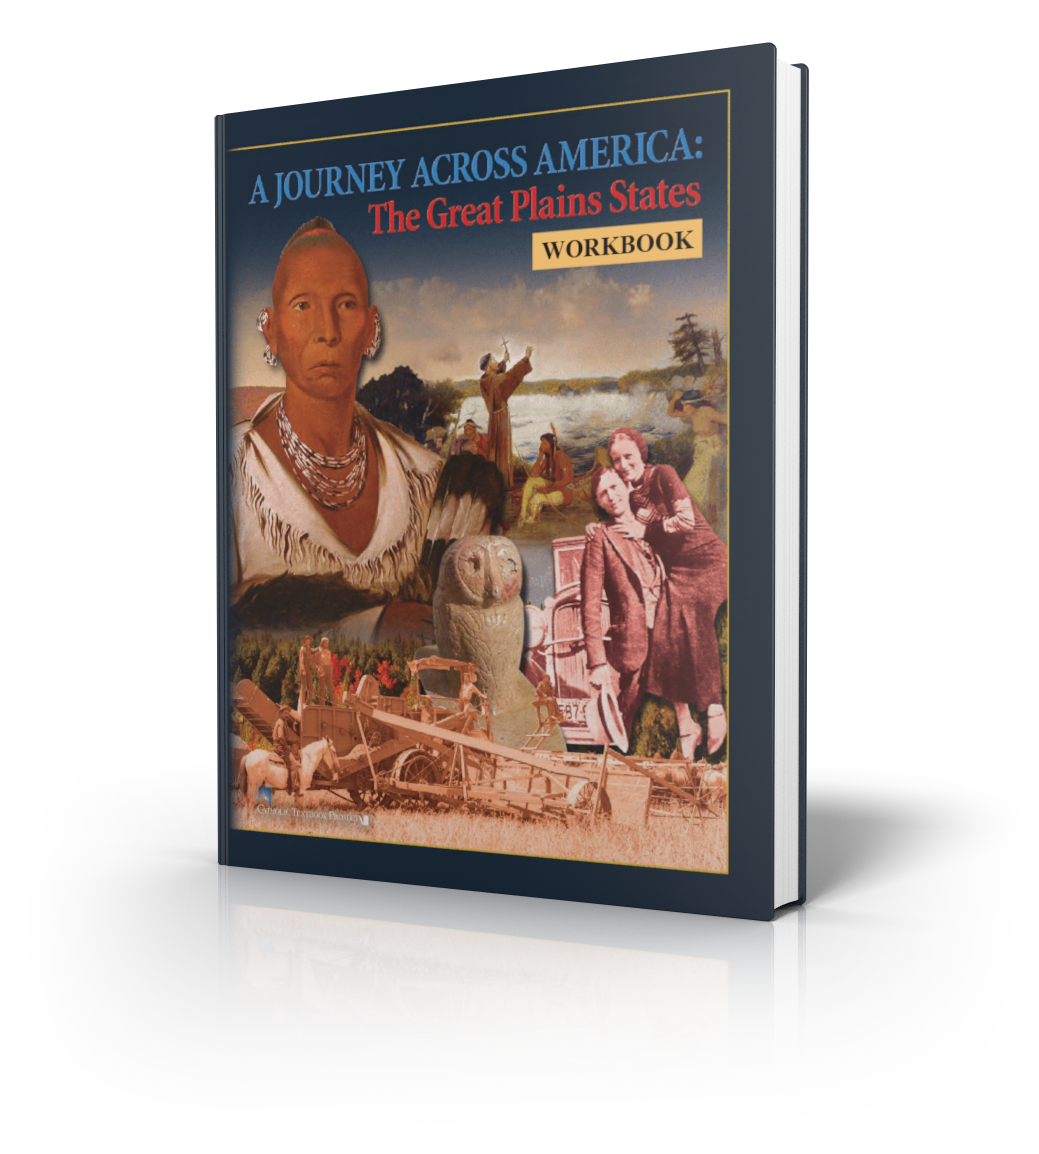 JAA: The Great Plains (Workbook)